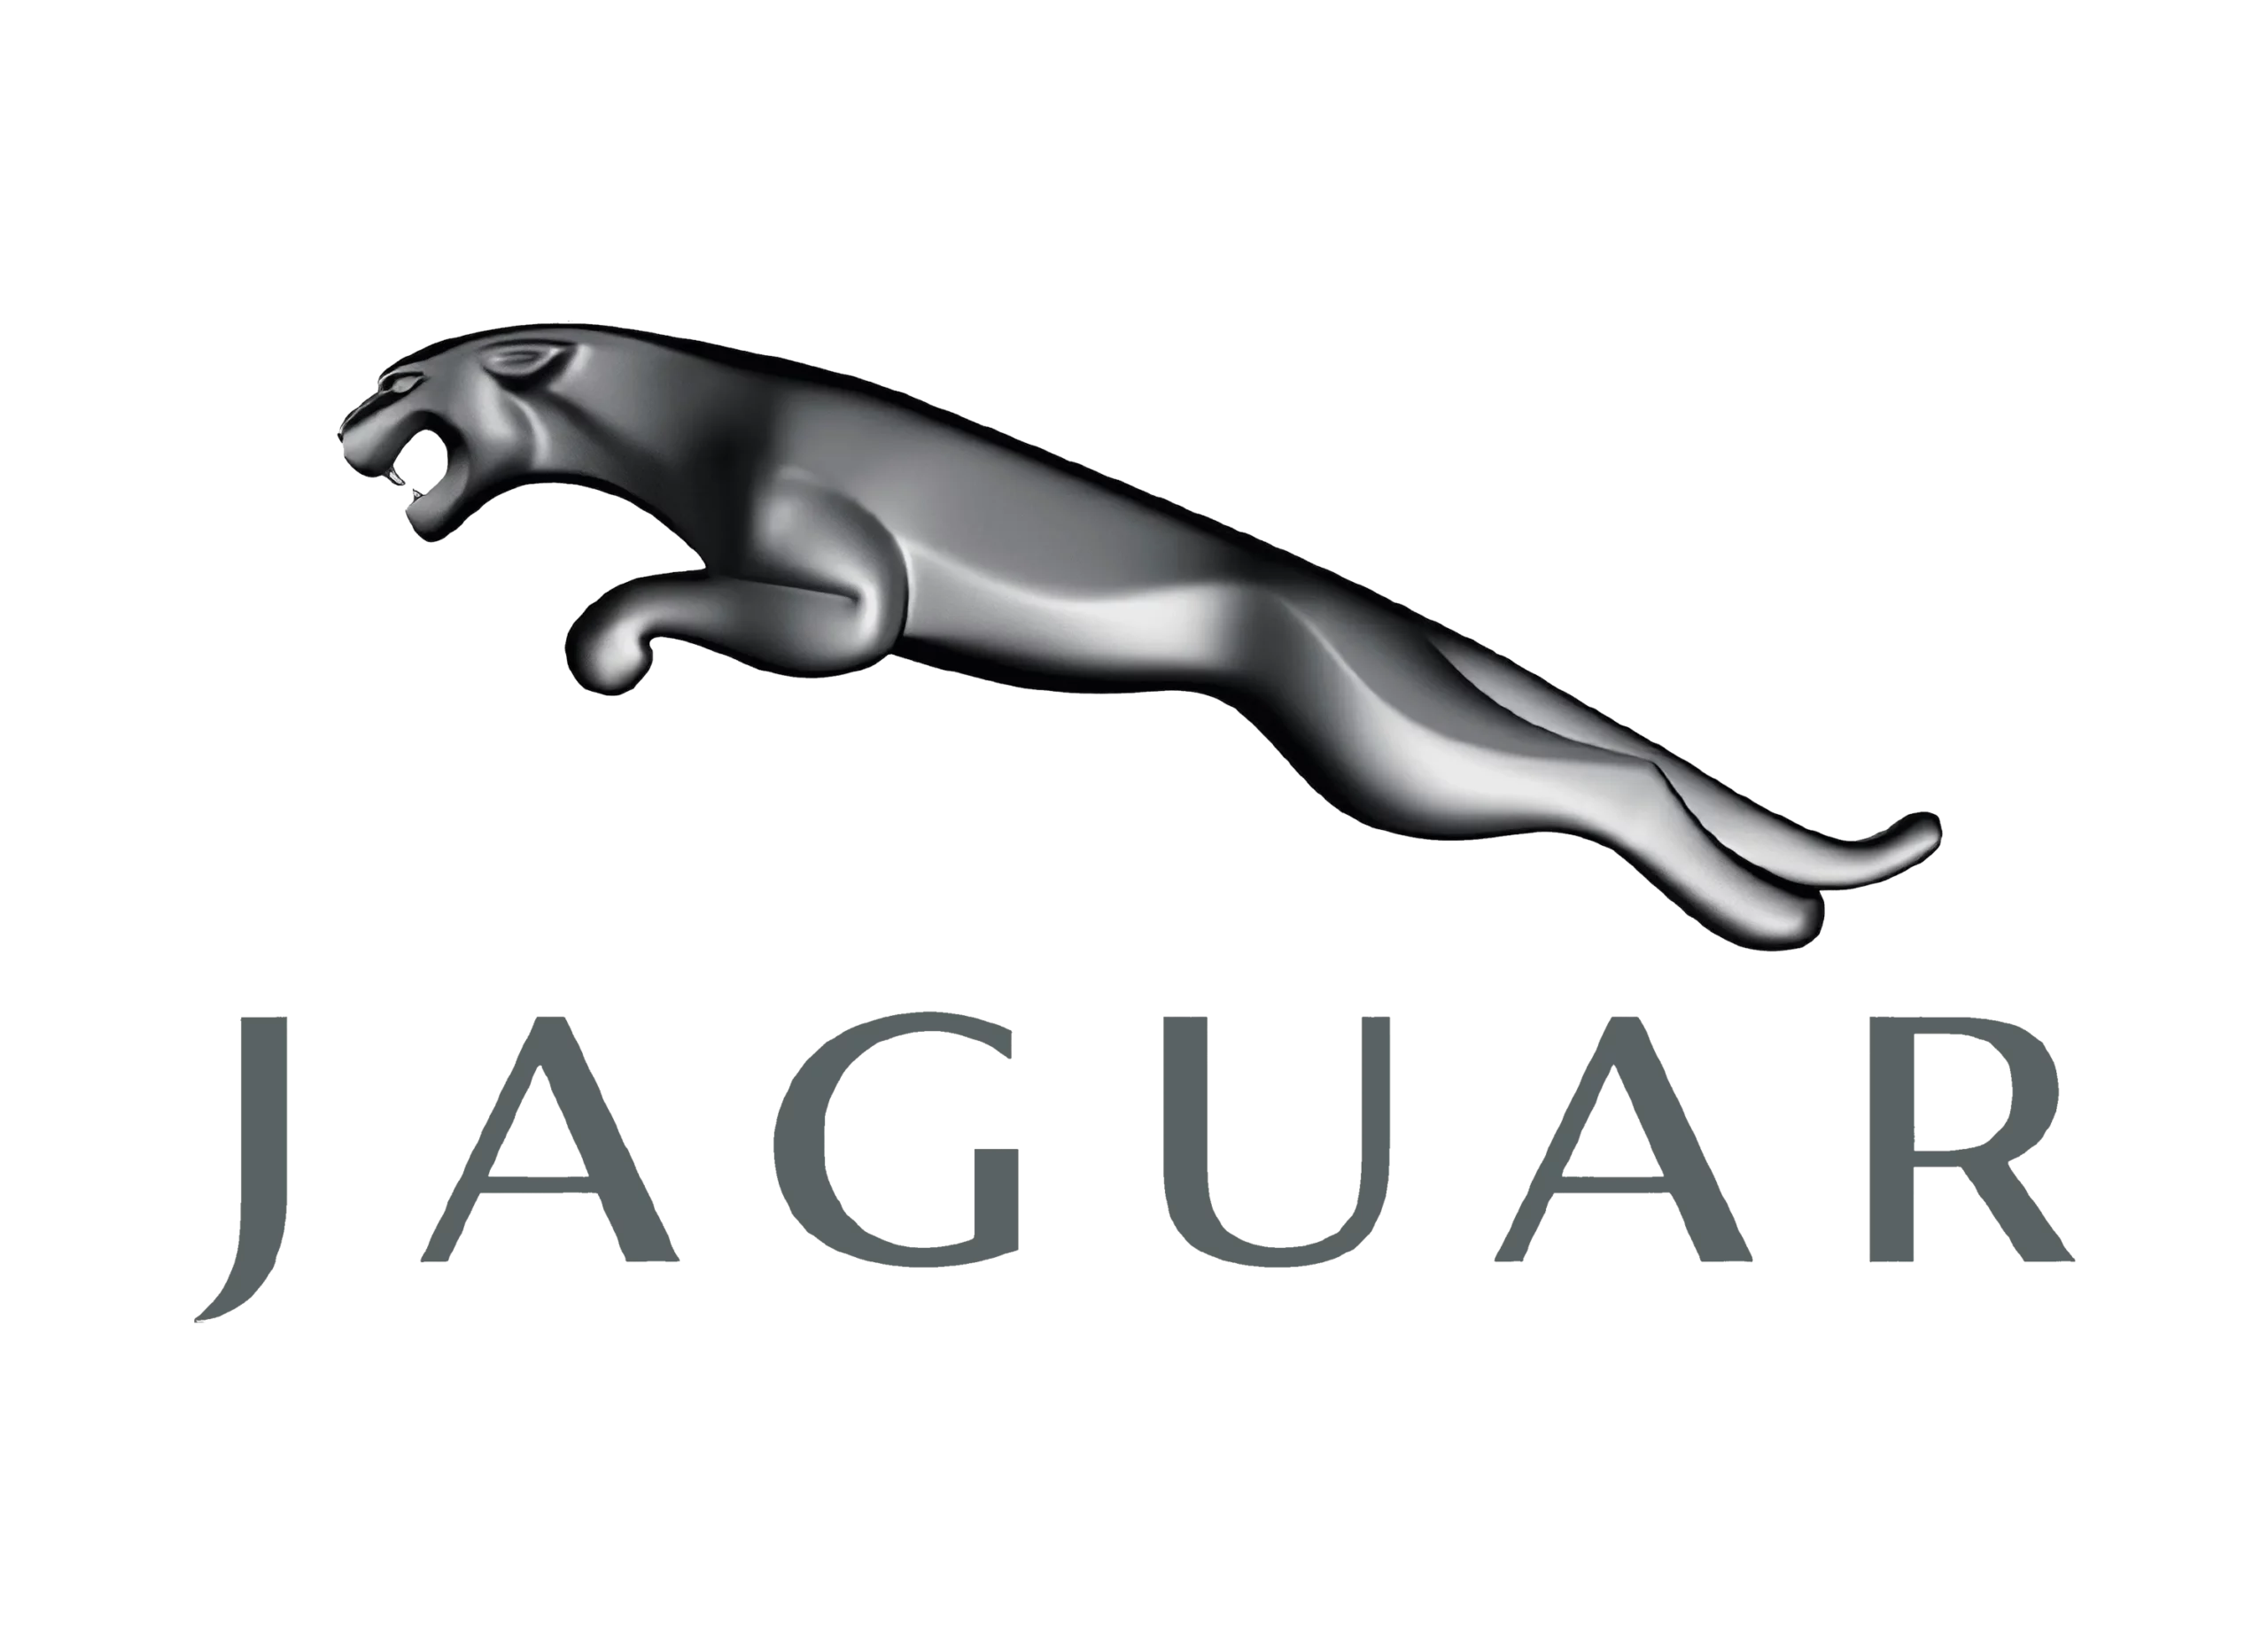 Jaguar symbol